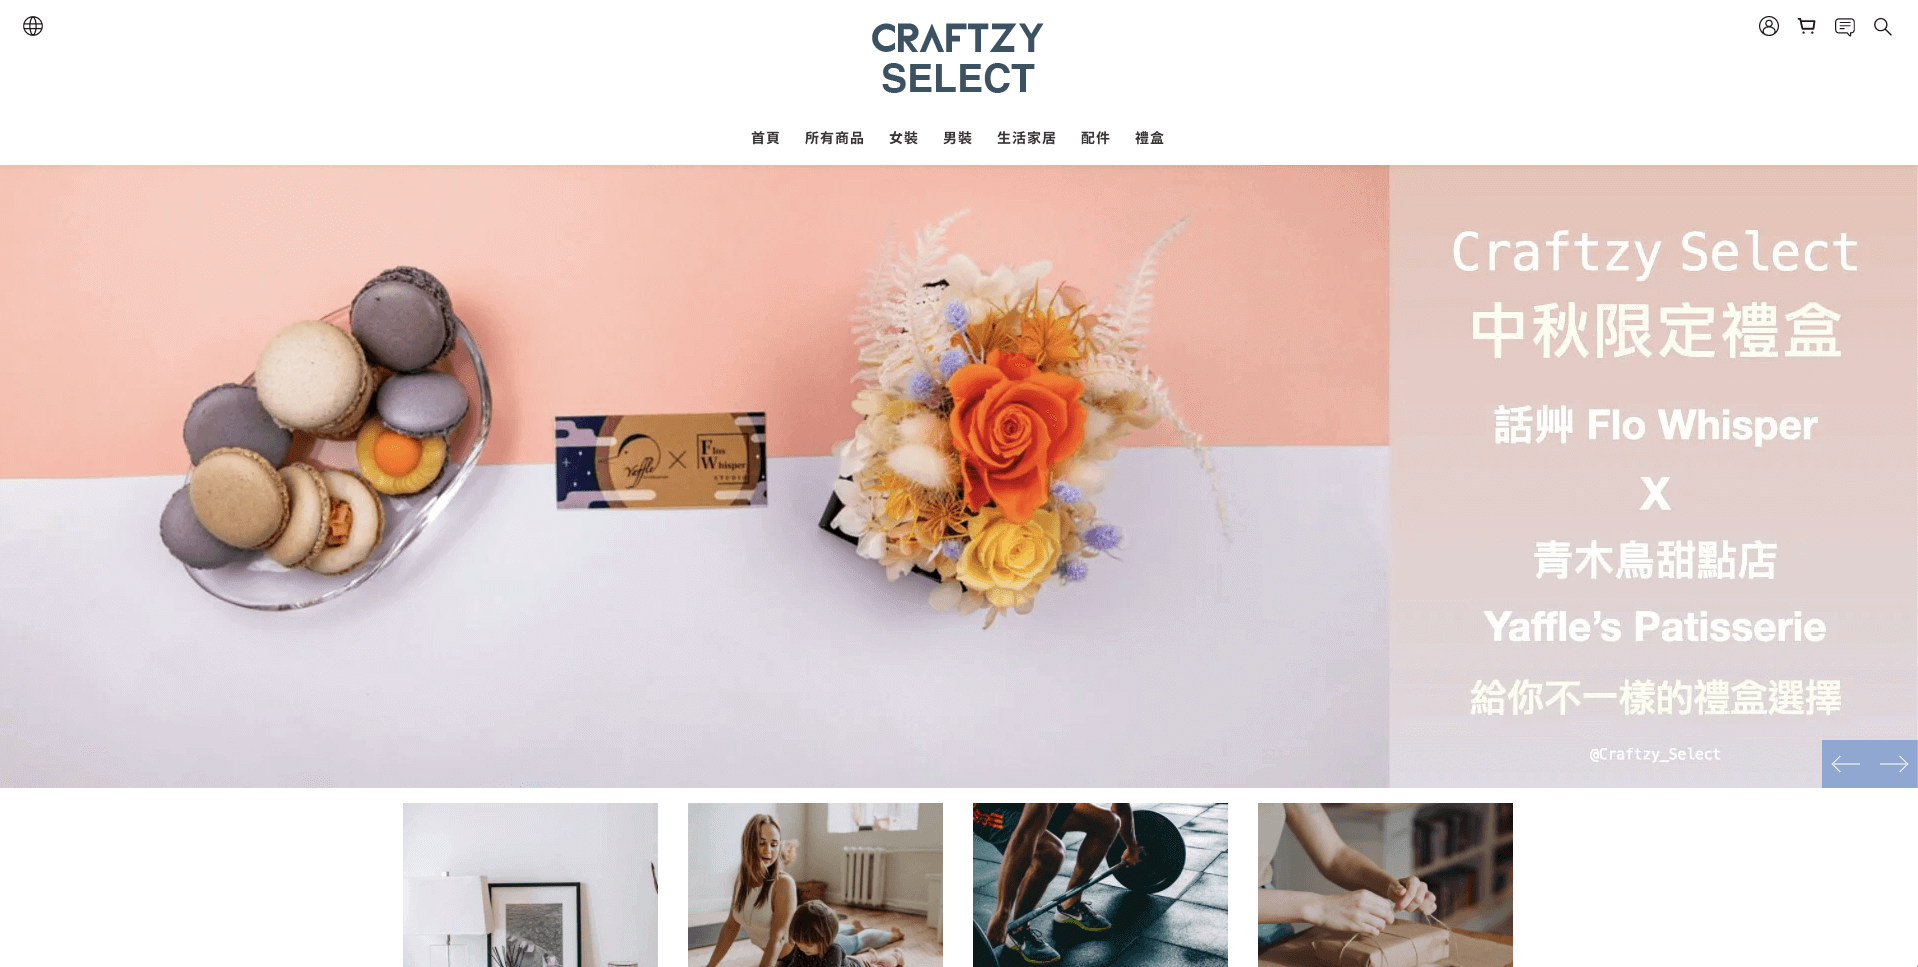 Craftzy Select 品牌官網